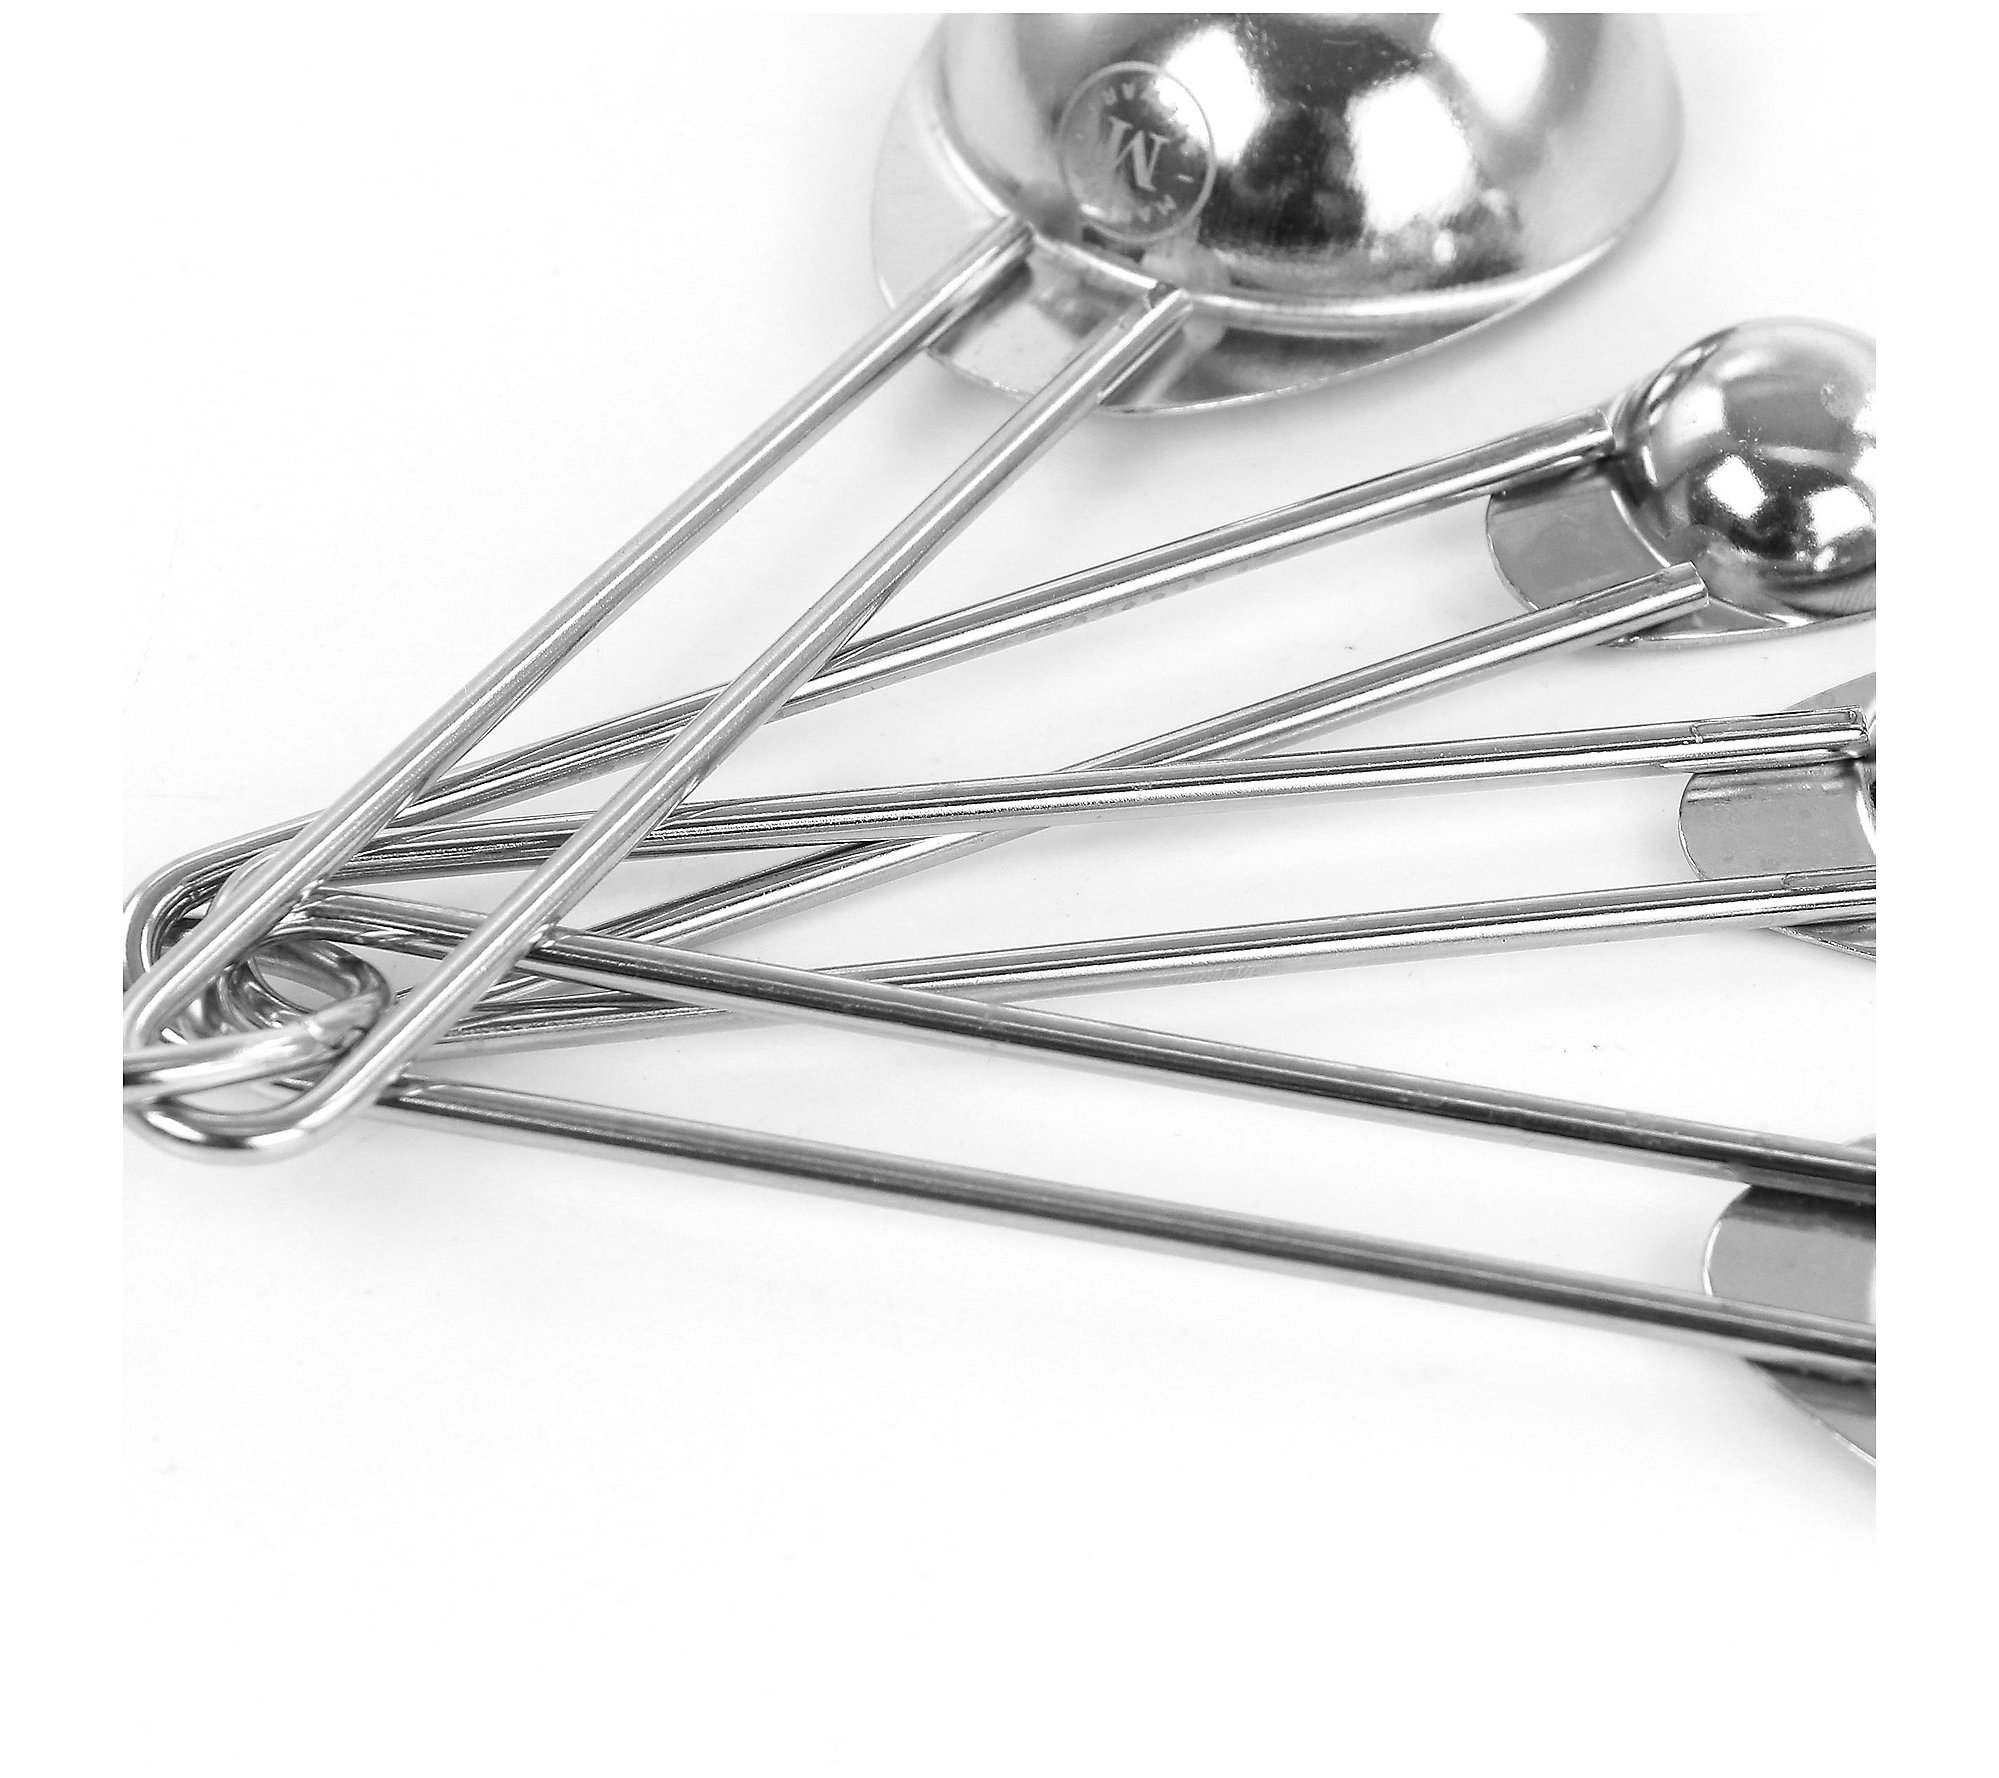 Martha Stewart Stainless Steel Measuring Spoons